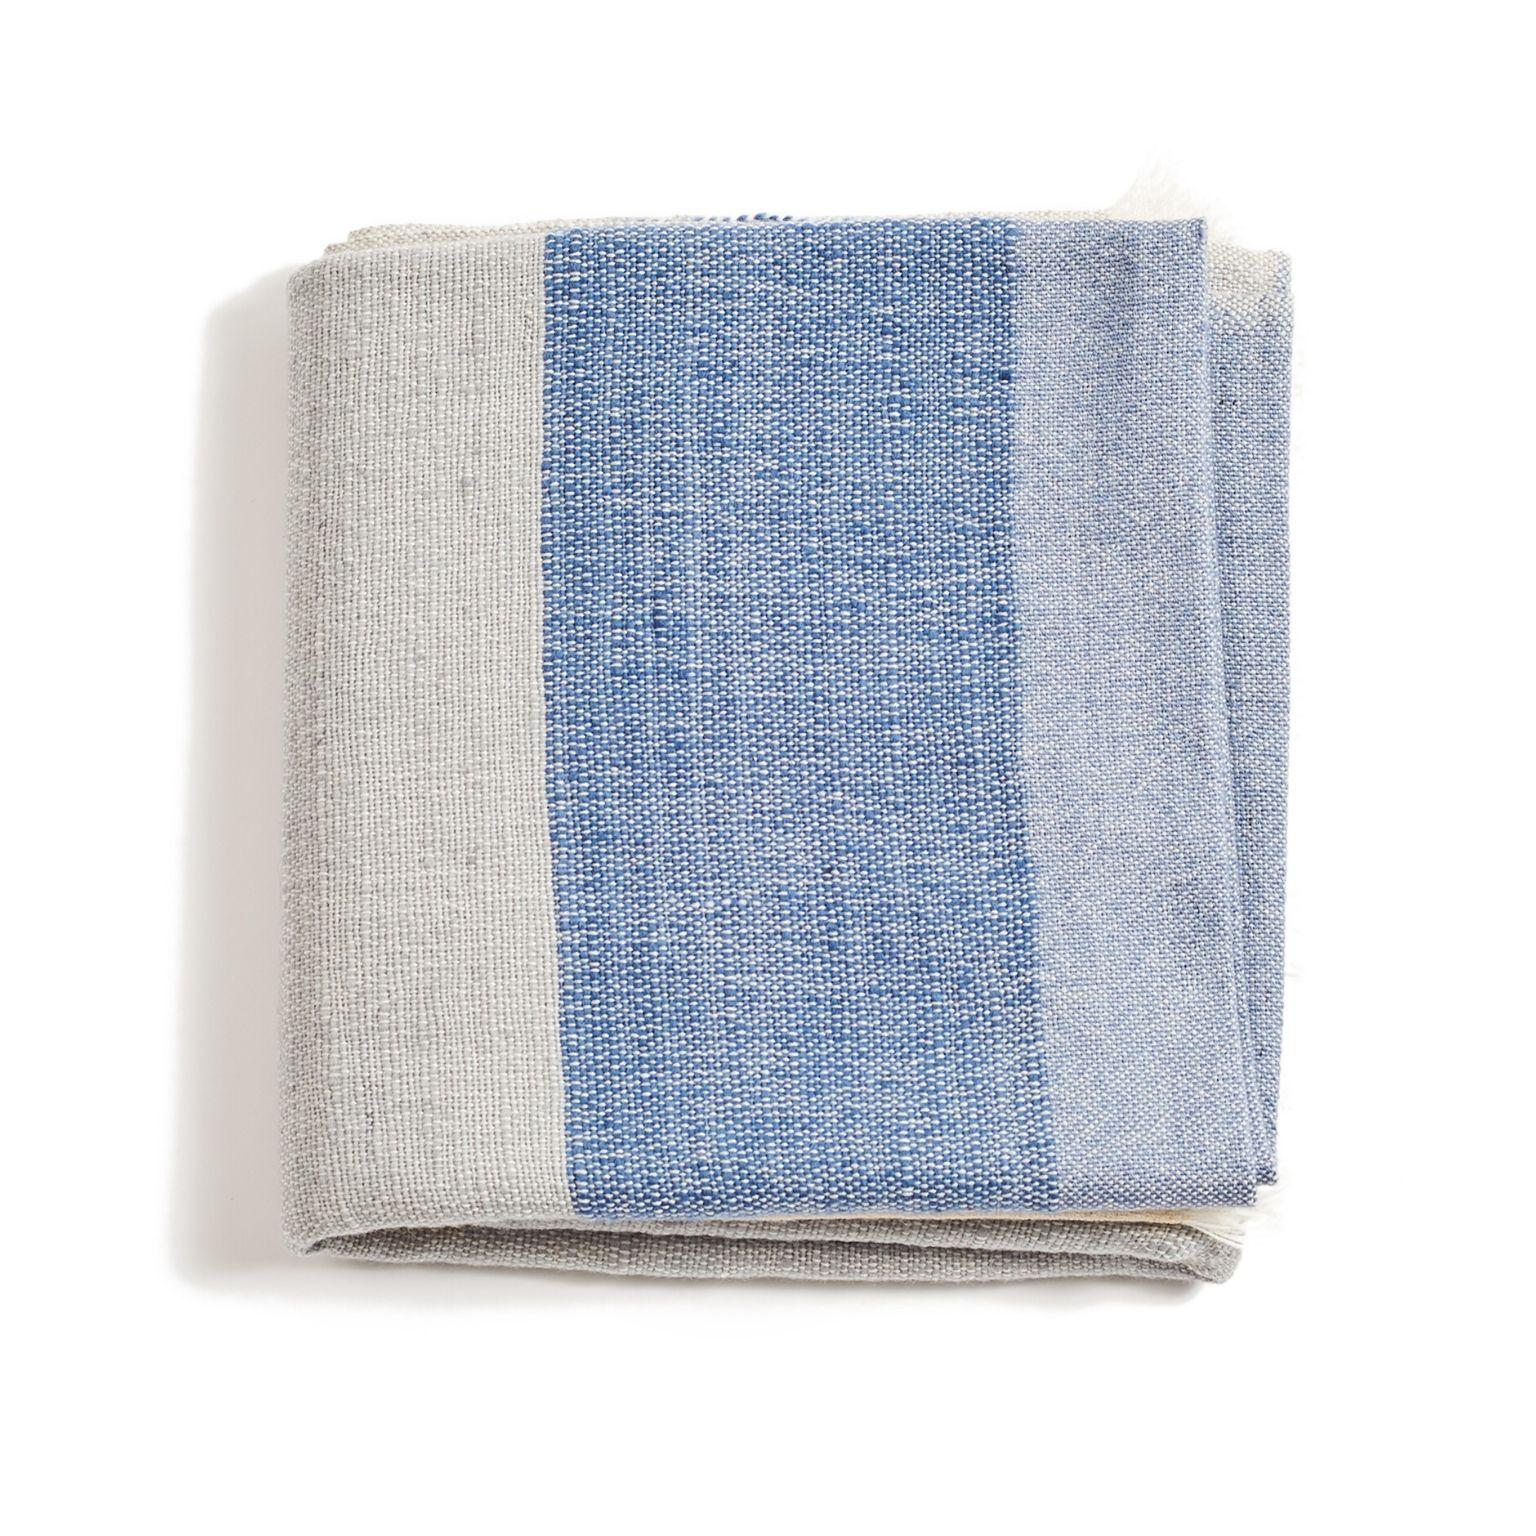 Contemporary Ceru Handloom Merino Throw / Blanket in Neutral Shades of Cream & Serene Blue For Sale